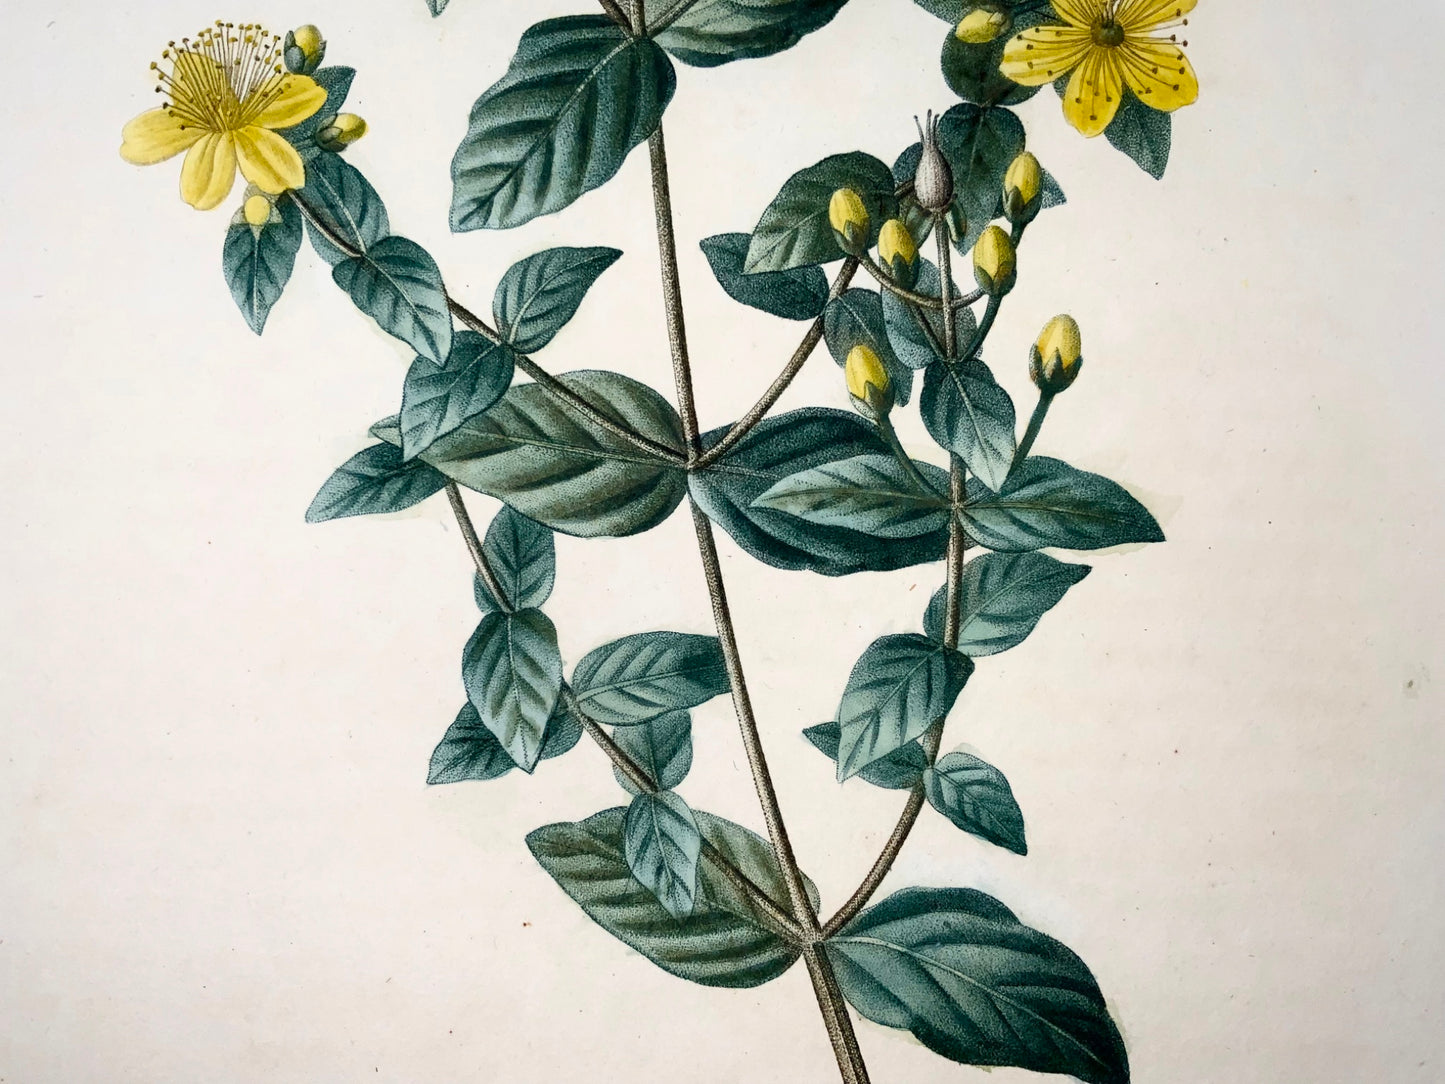 1801 Millepertuis, Bessa, Gabriel, gravure en pointillé folio, finition main, botanique